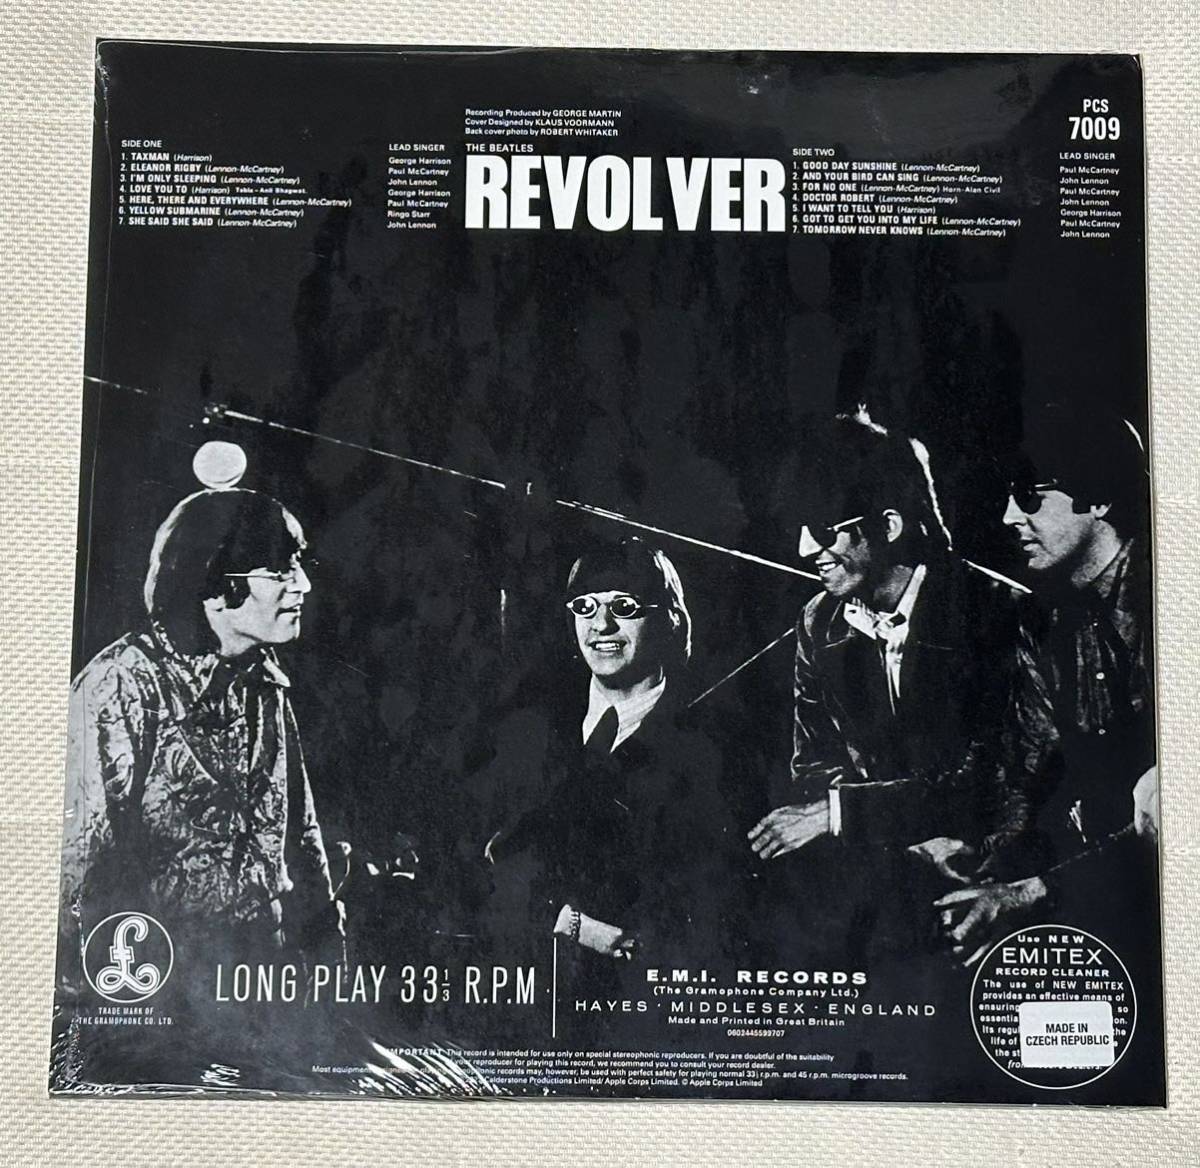 The Beatles ビートルズ/ Revolver リボルバー Anniversary Edition Picture Disc Vinyl ピクチャーレコード_画像3